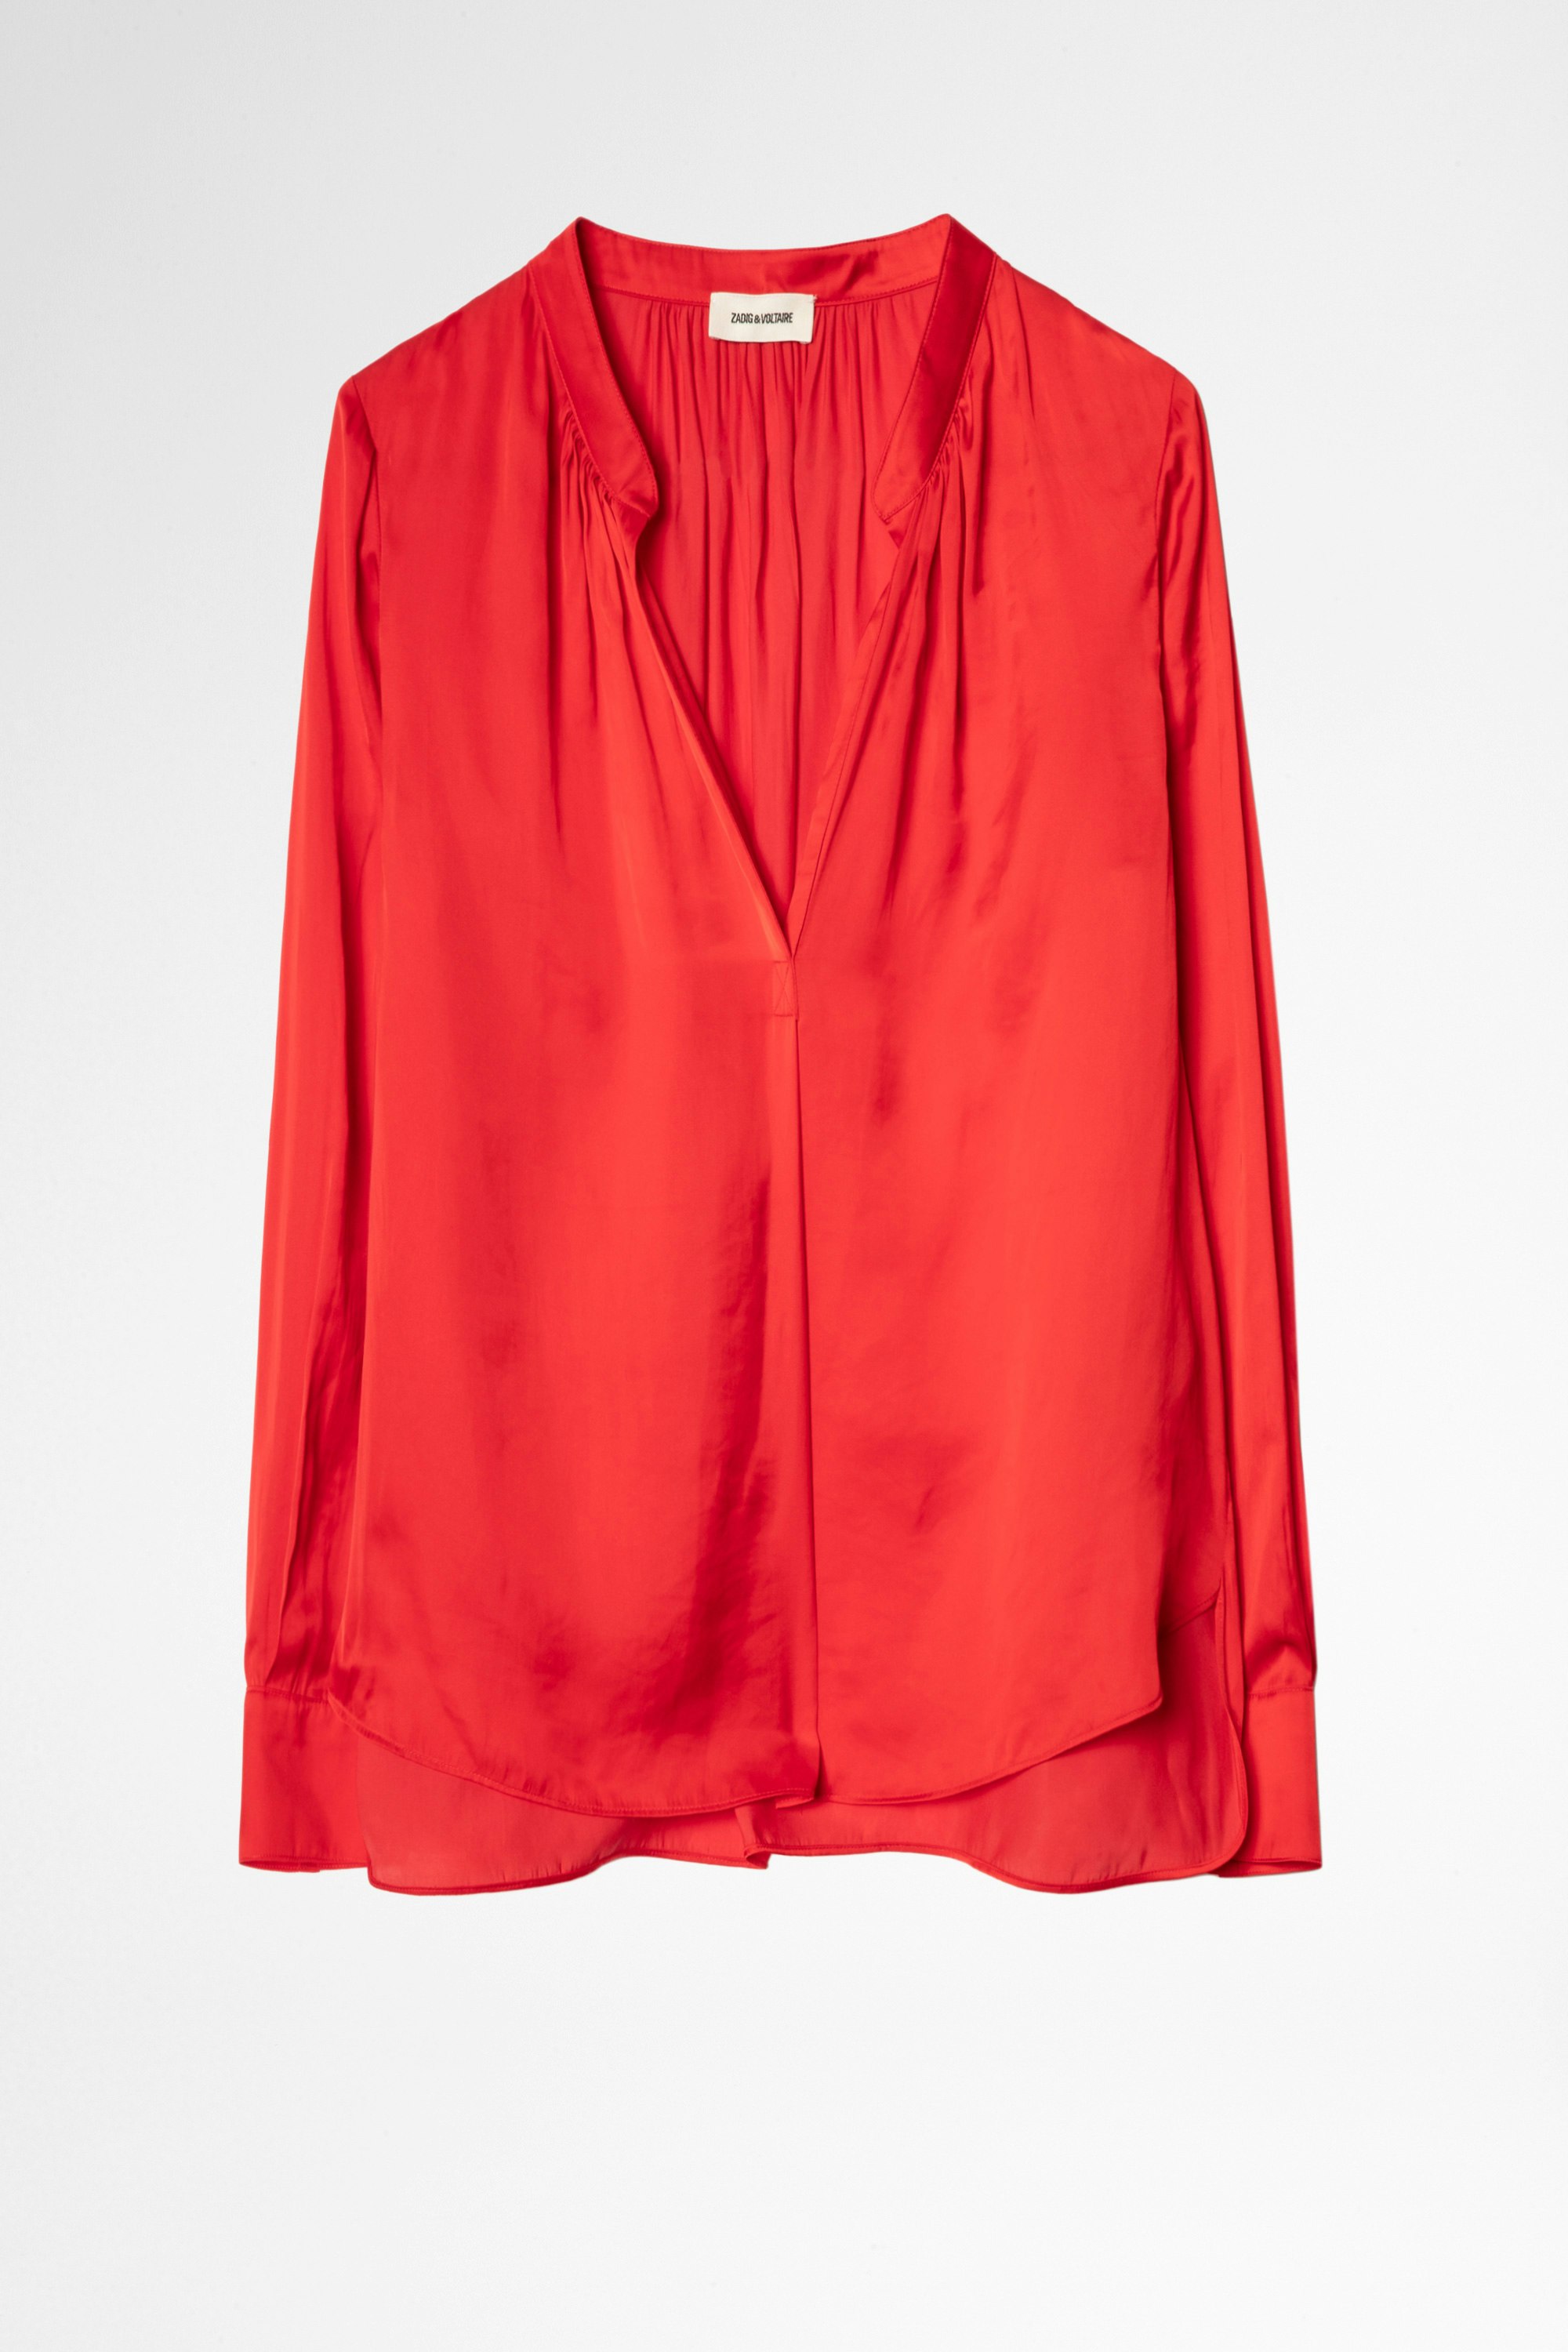 Tink Satin Blouse Women's red satin tunic